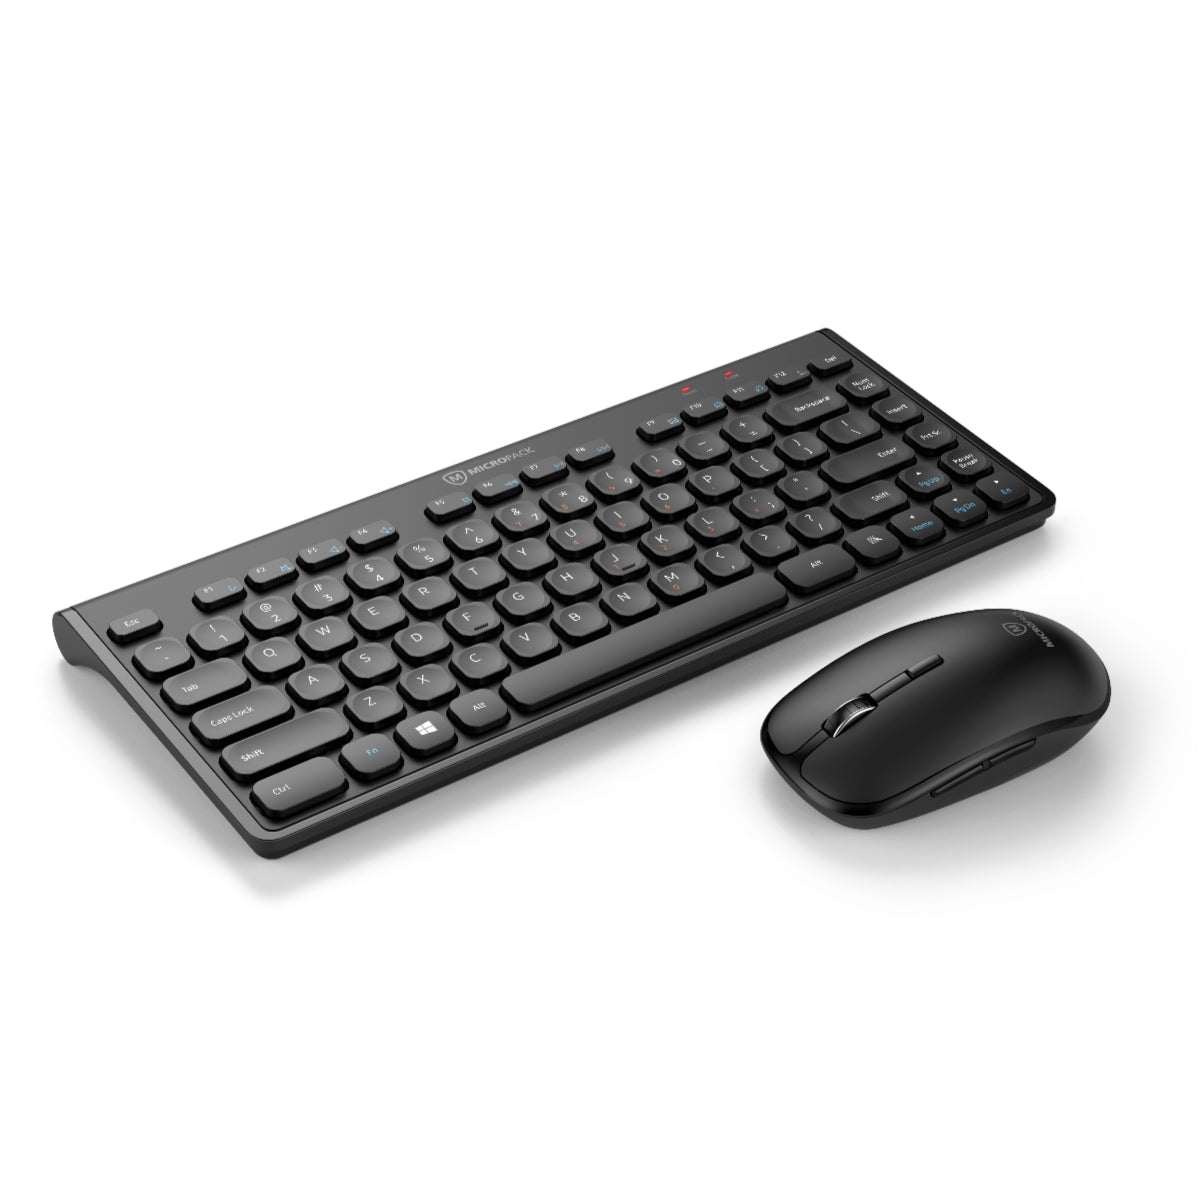 Wholesale 2.4g Wireless Mouse and Keyboard Combo KM-228W